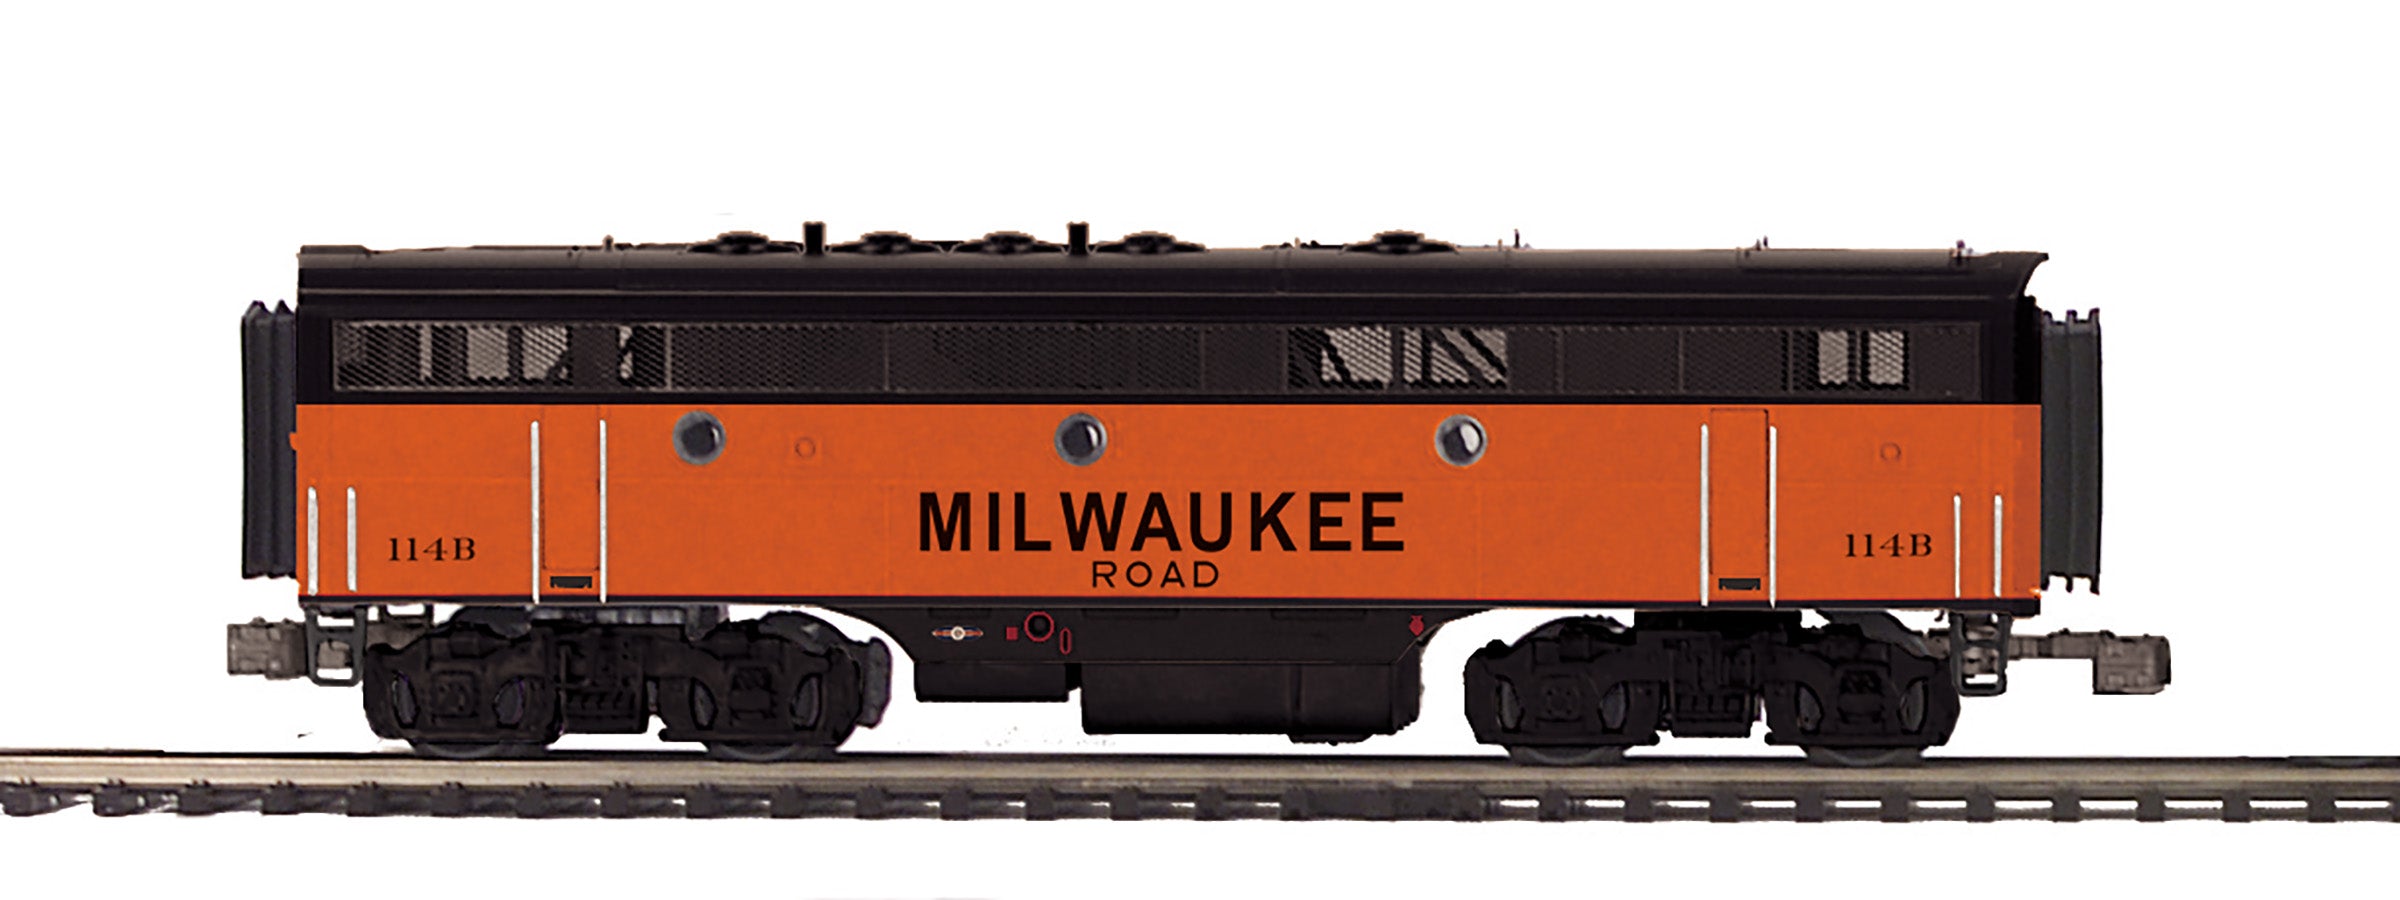 MTH 20-21826-3 - F-7 B Unit Diesel Engine "Milwaukee Road" #114B (Unpowered) - Custom Run for MrMuffin'sTrains